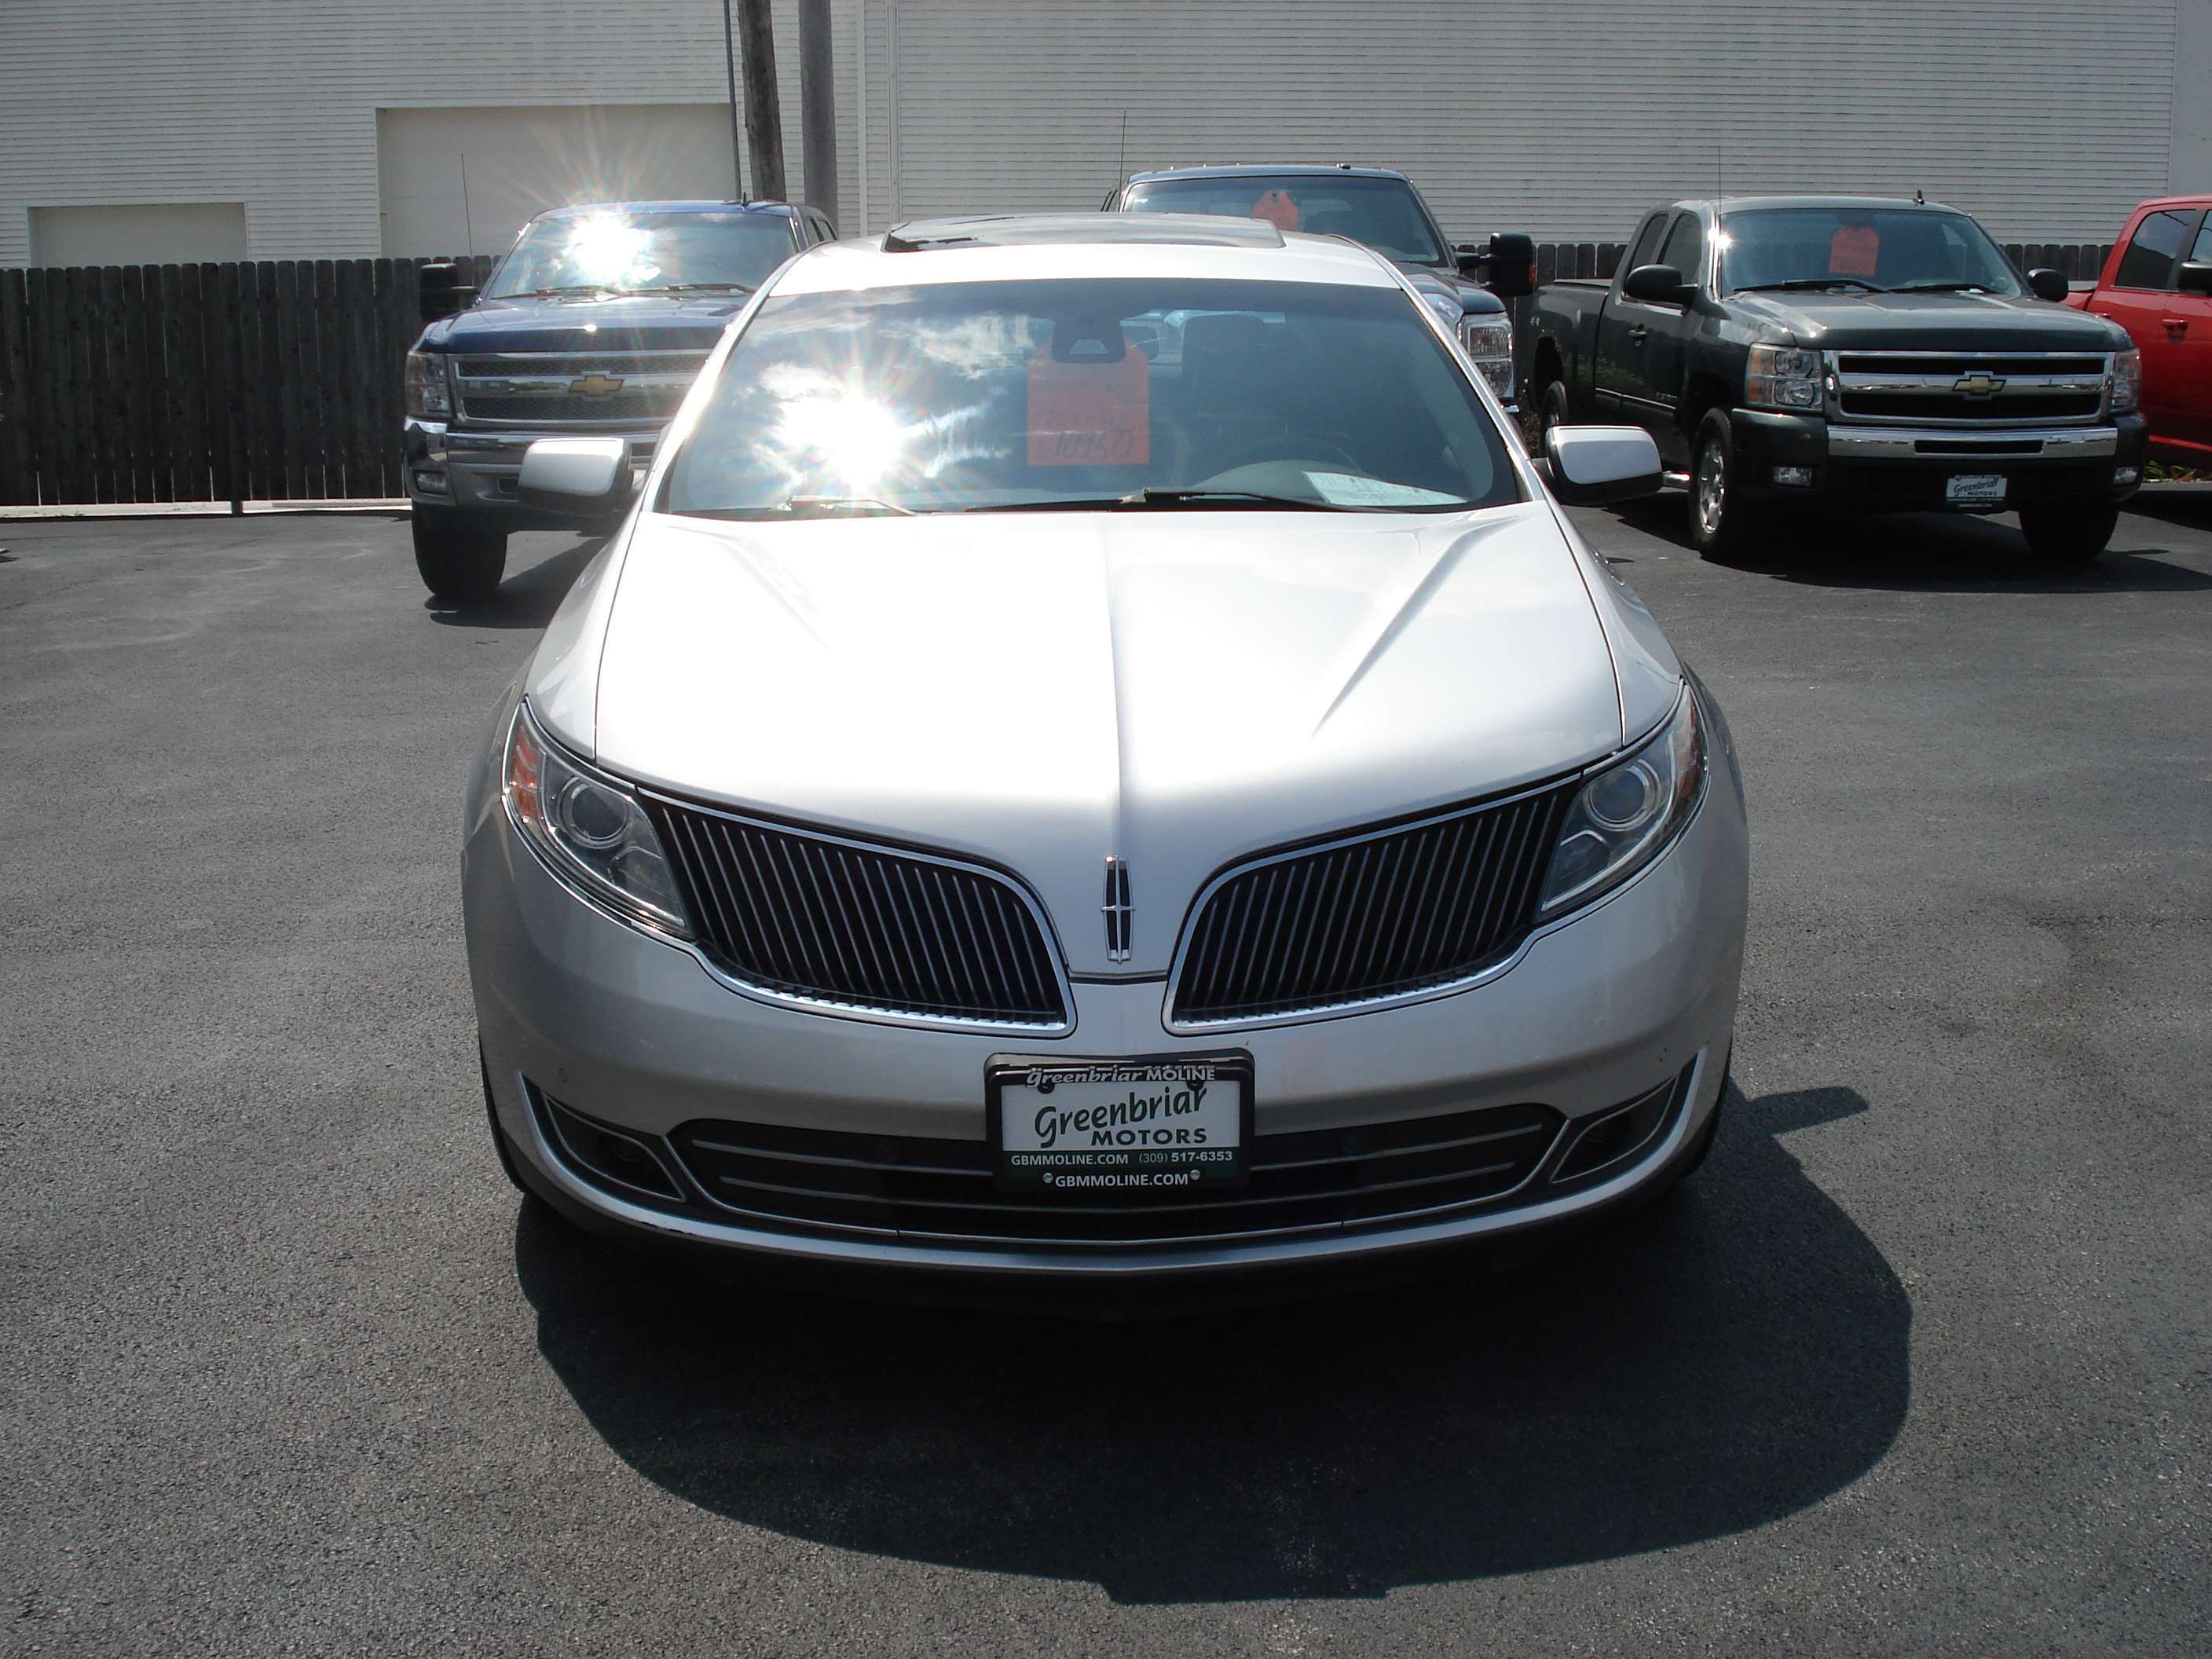 2013 Lincoln Mks